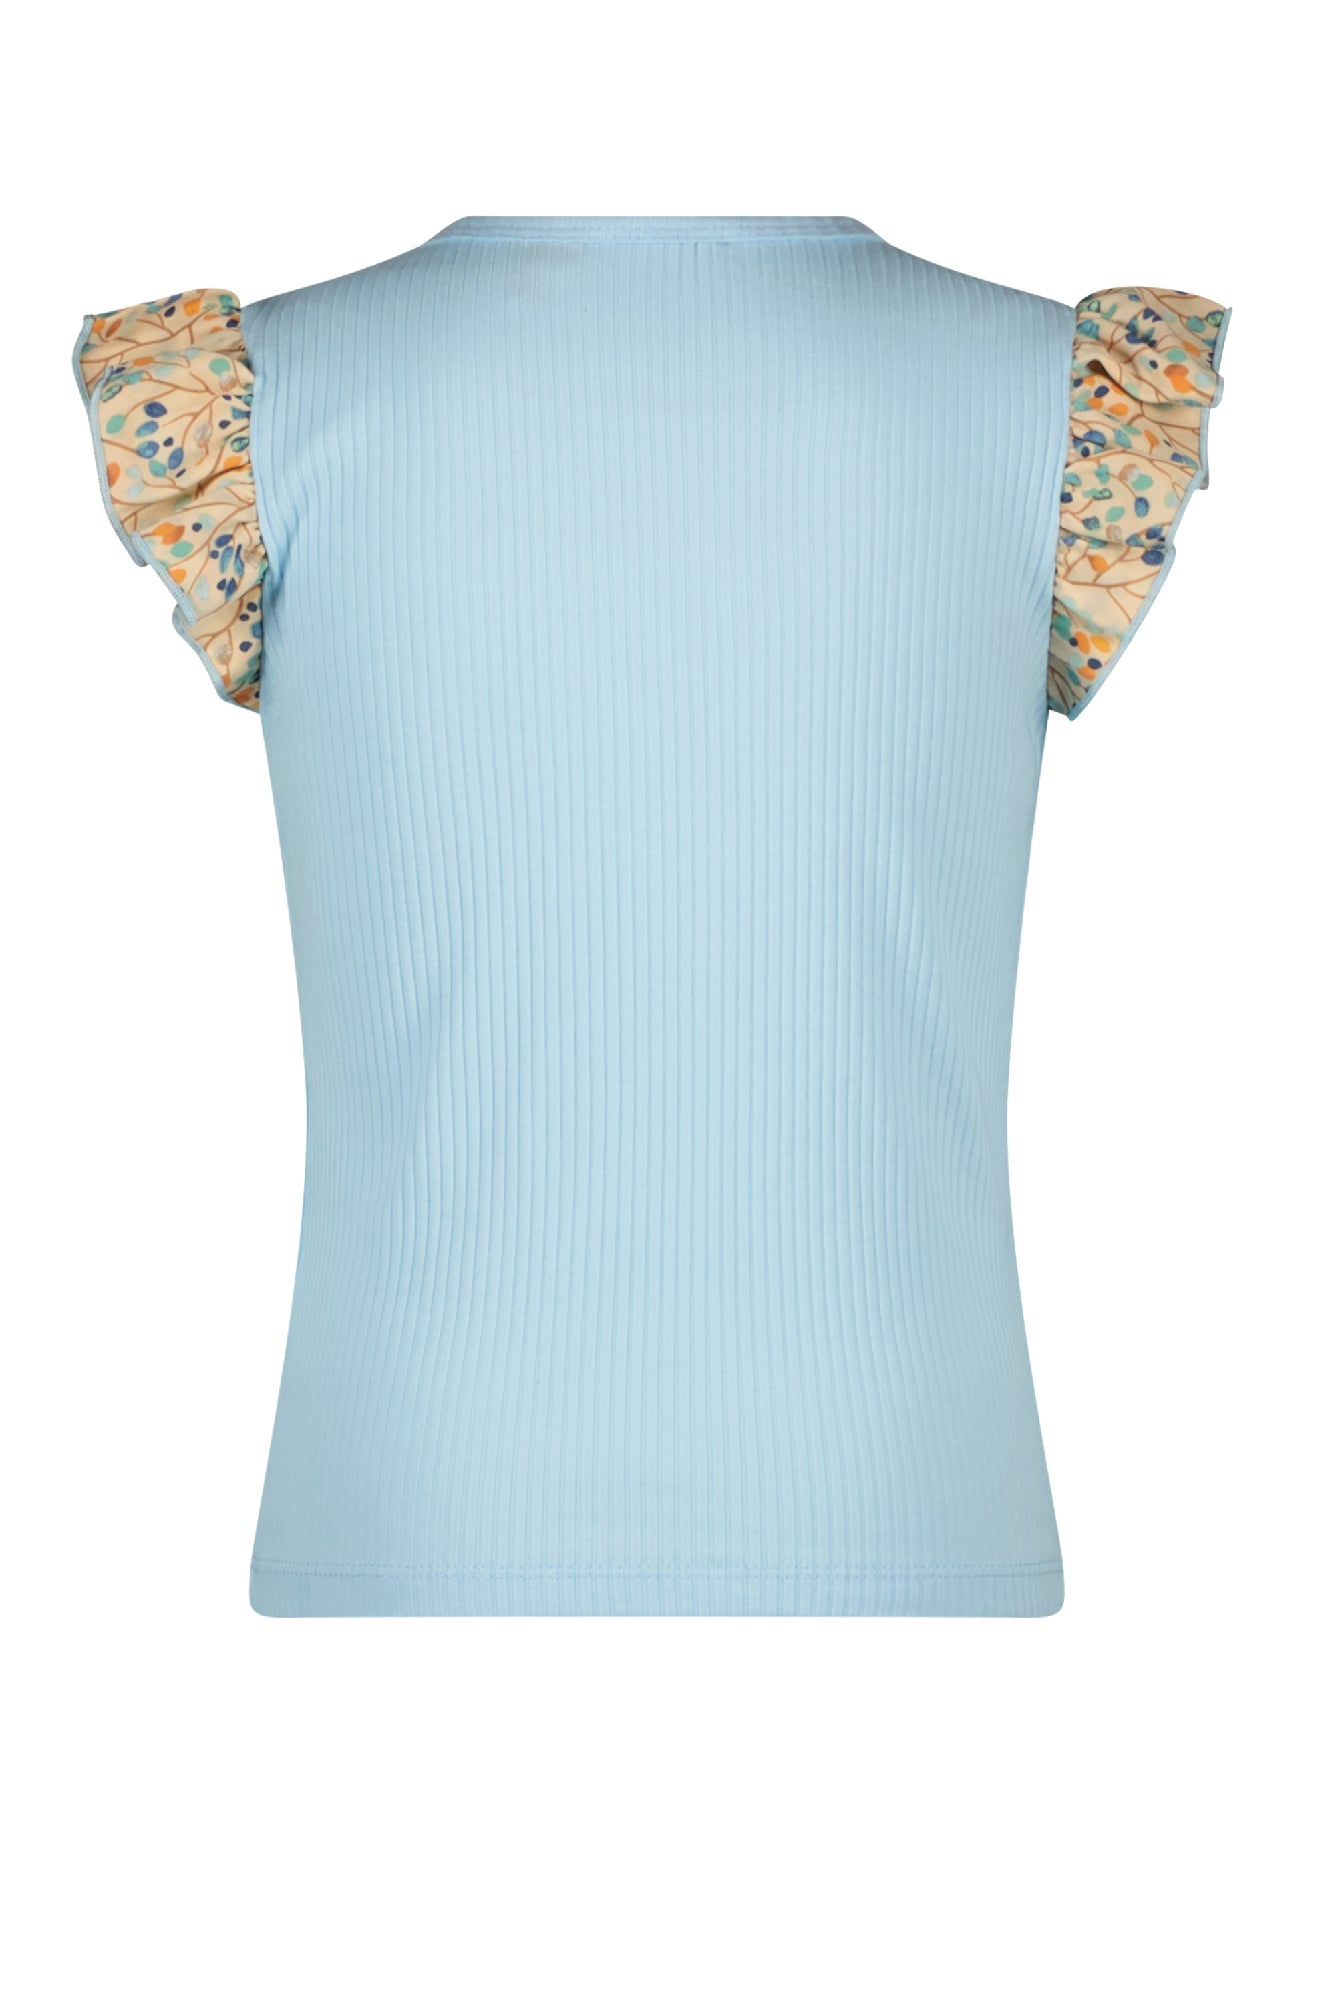 Meisjes Kamsi rib jersey tshirt with contrast ruffled s/sleeves van NoNo in de kleur Sky High in maat 134-140.